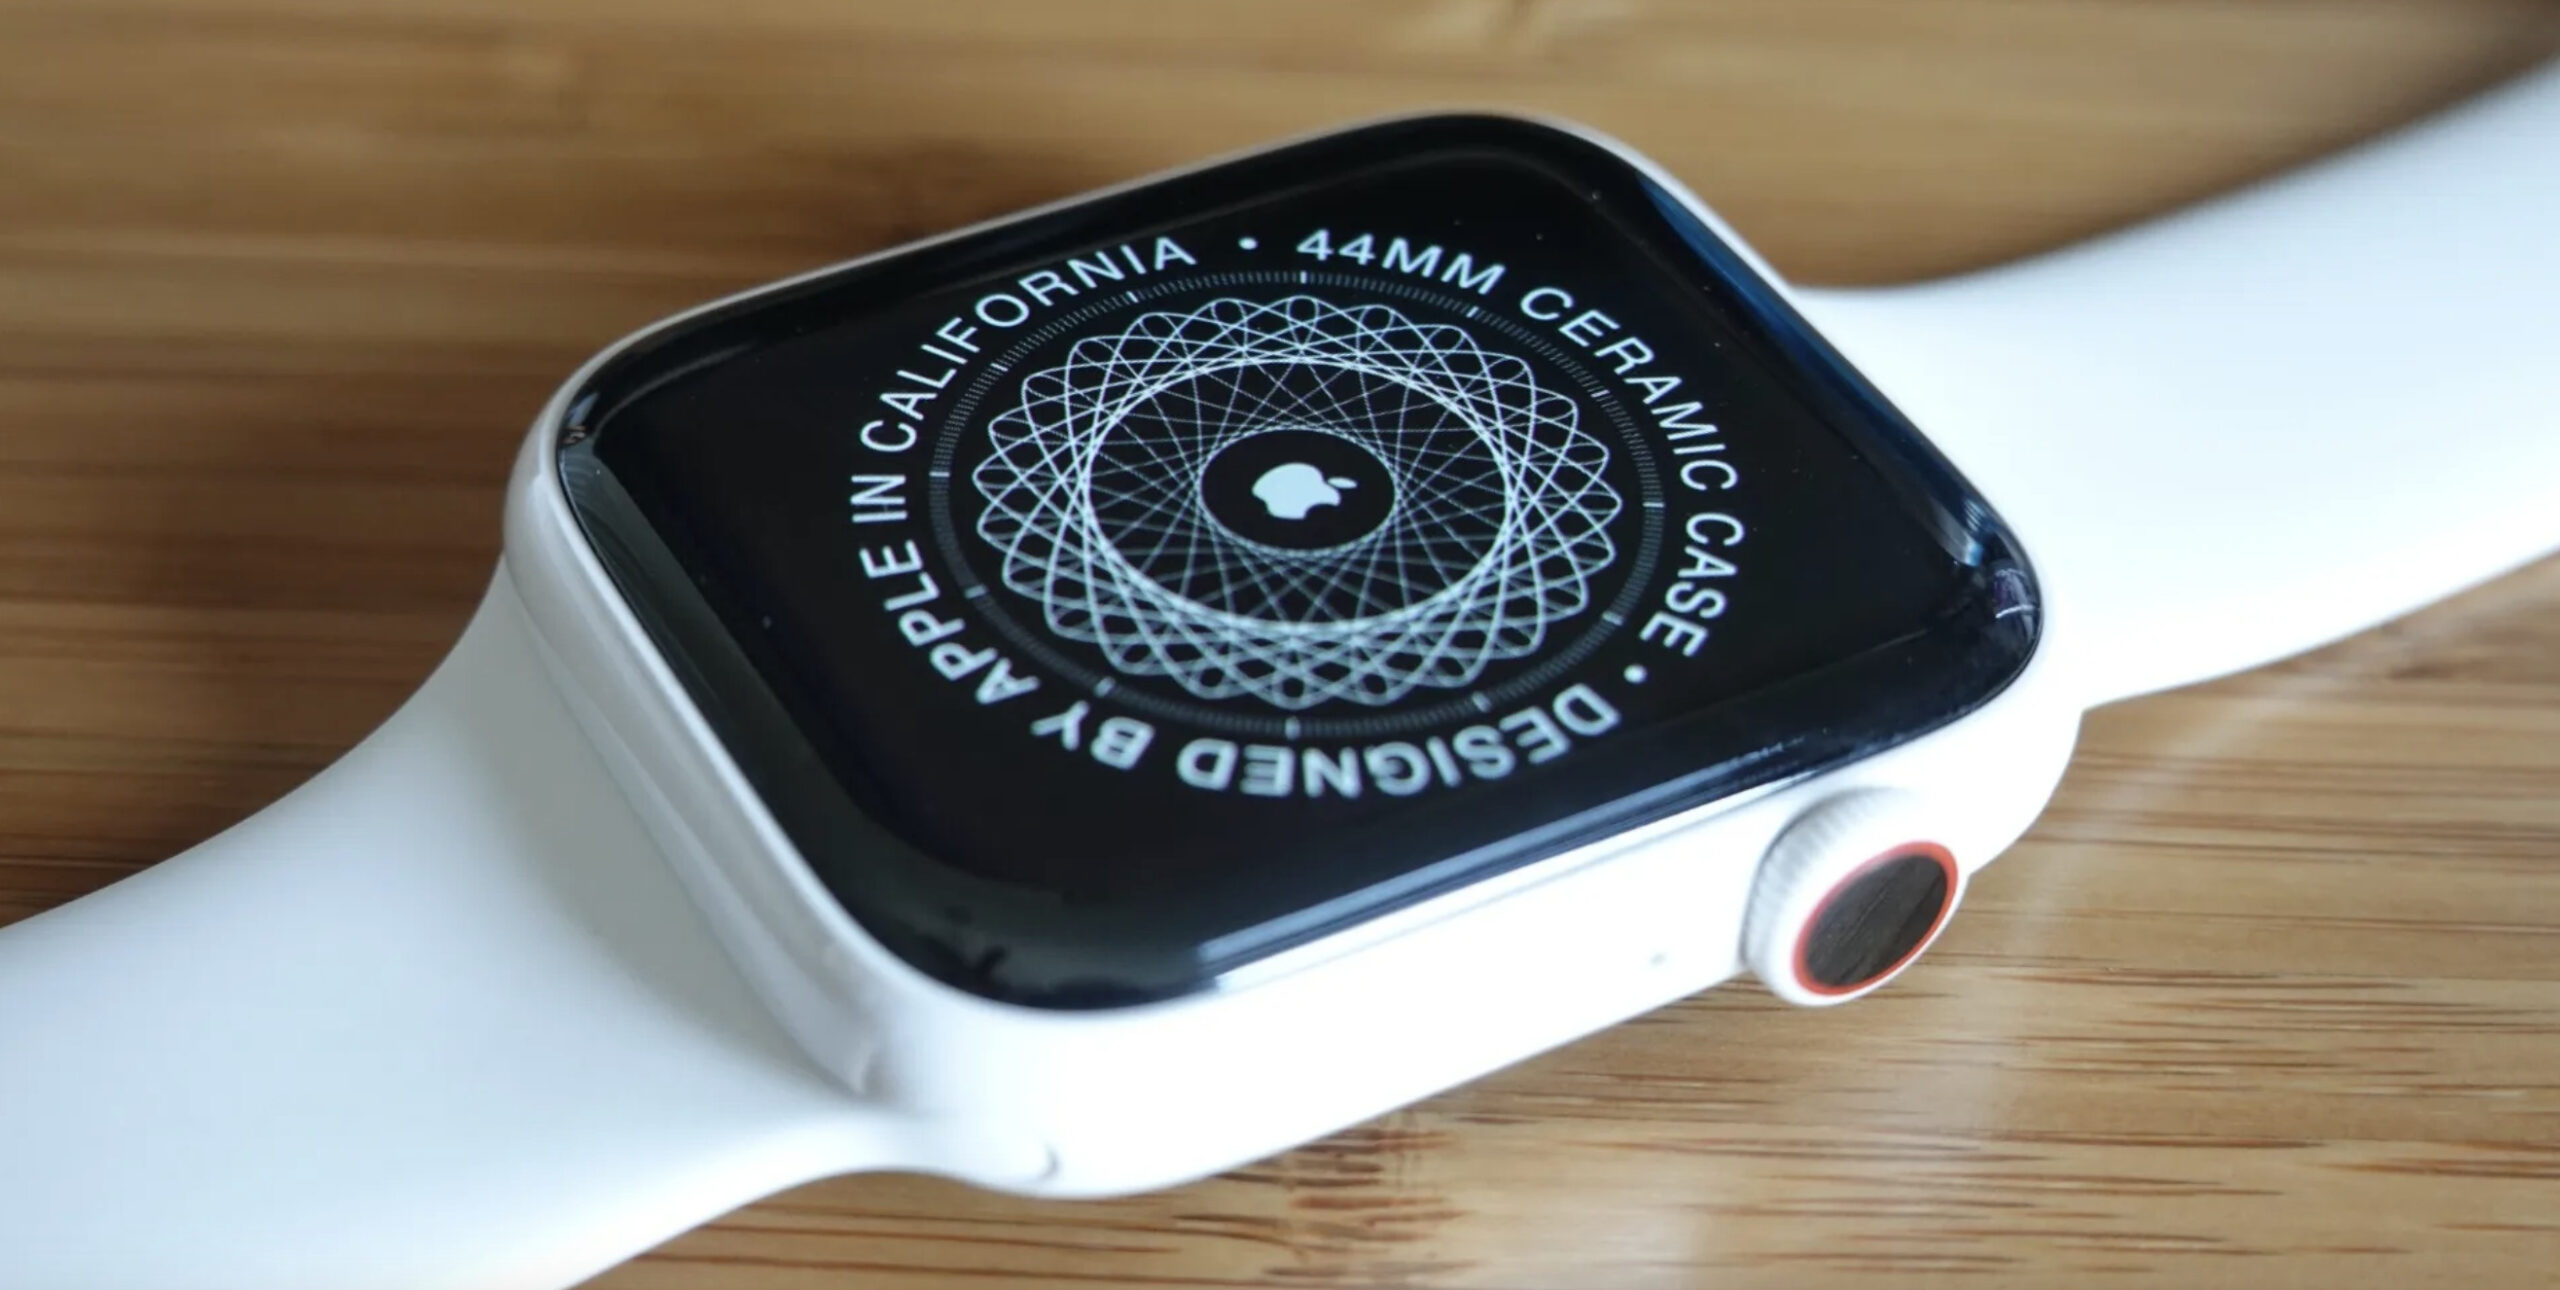 Watch series 9 45mm aluminium. Эпл вотч Сериес 7. Apple watch Series 6 44mm Aluminum Ceramic Case. Apple watch 4 44mm Ceramic. Часы Series6.44mm al uminum & Ceramic Ceramic Case. ECG.